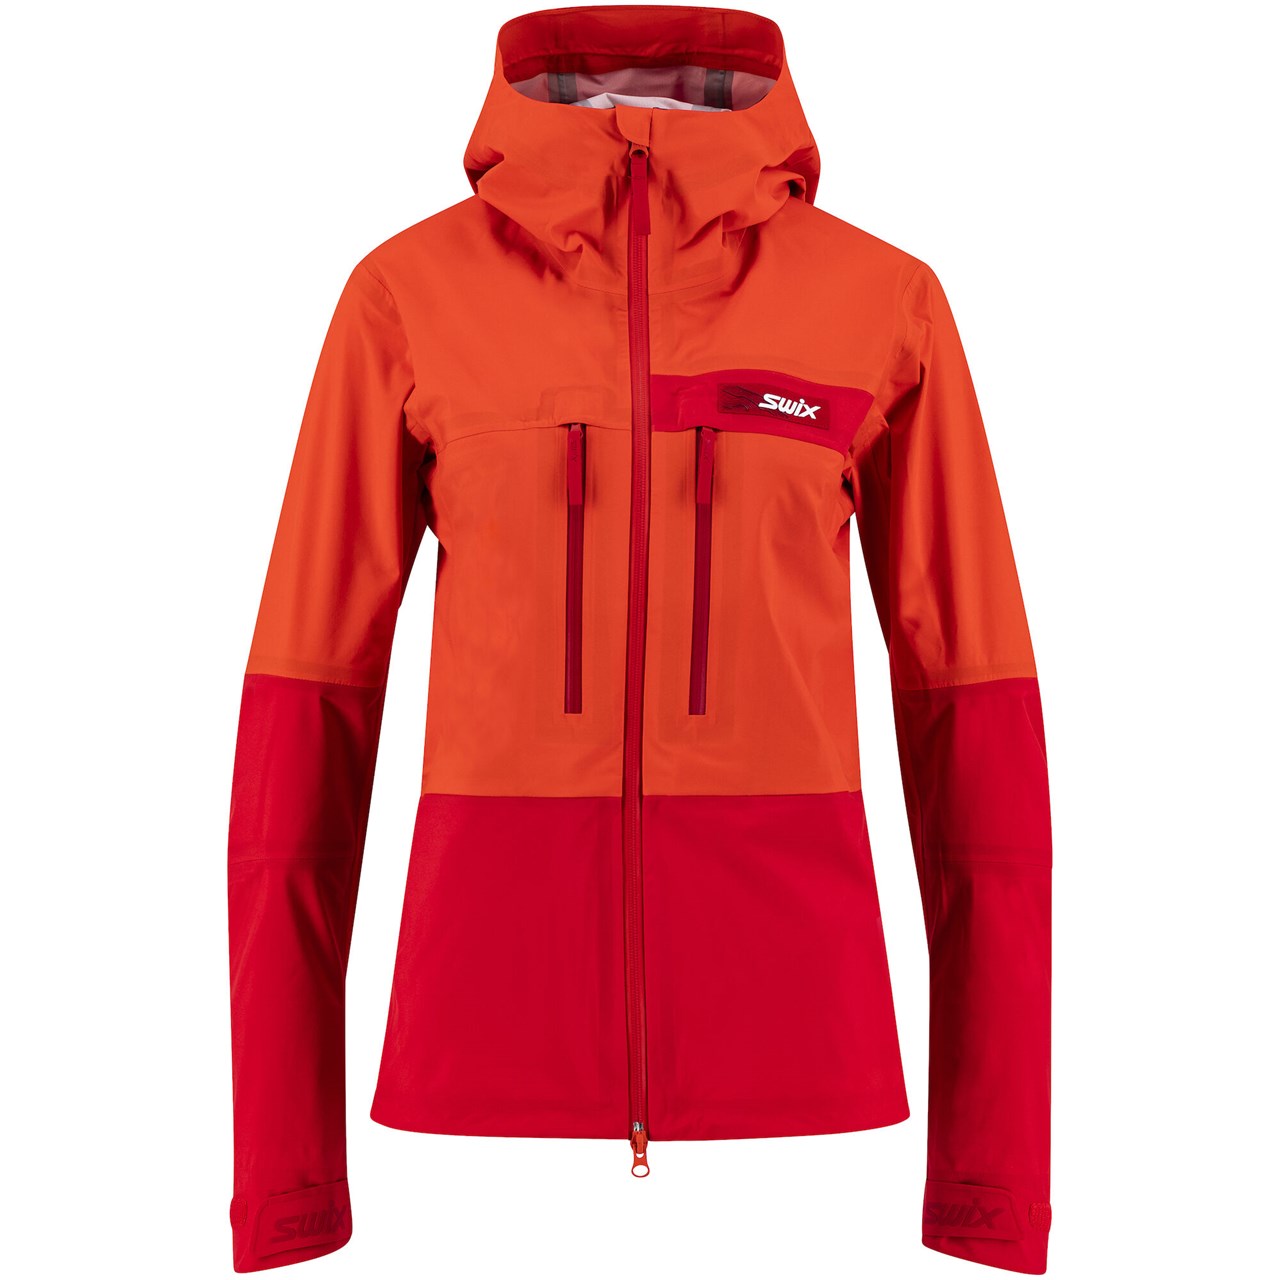 Swix Surmount Shell Women's Jacket APPAREL Swix Apparel S Swix Red 